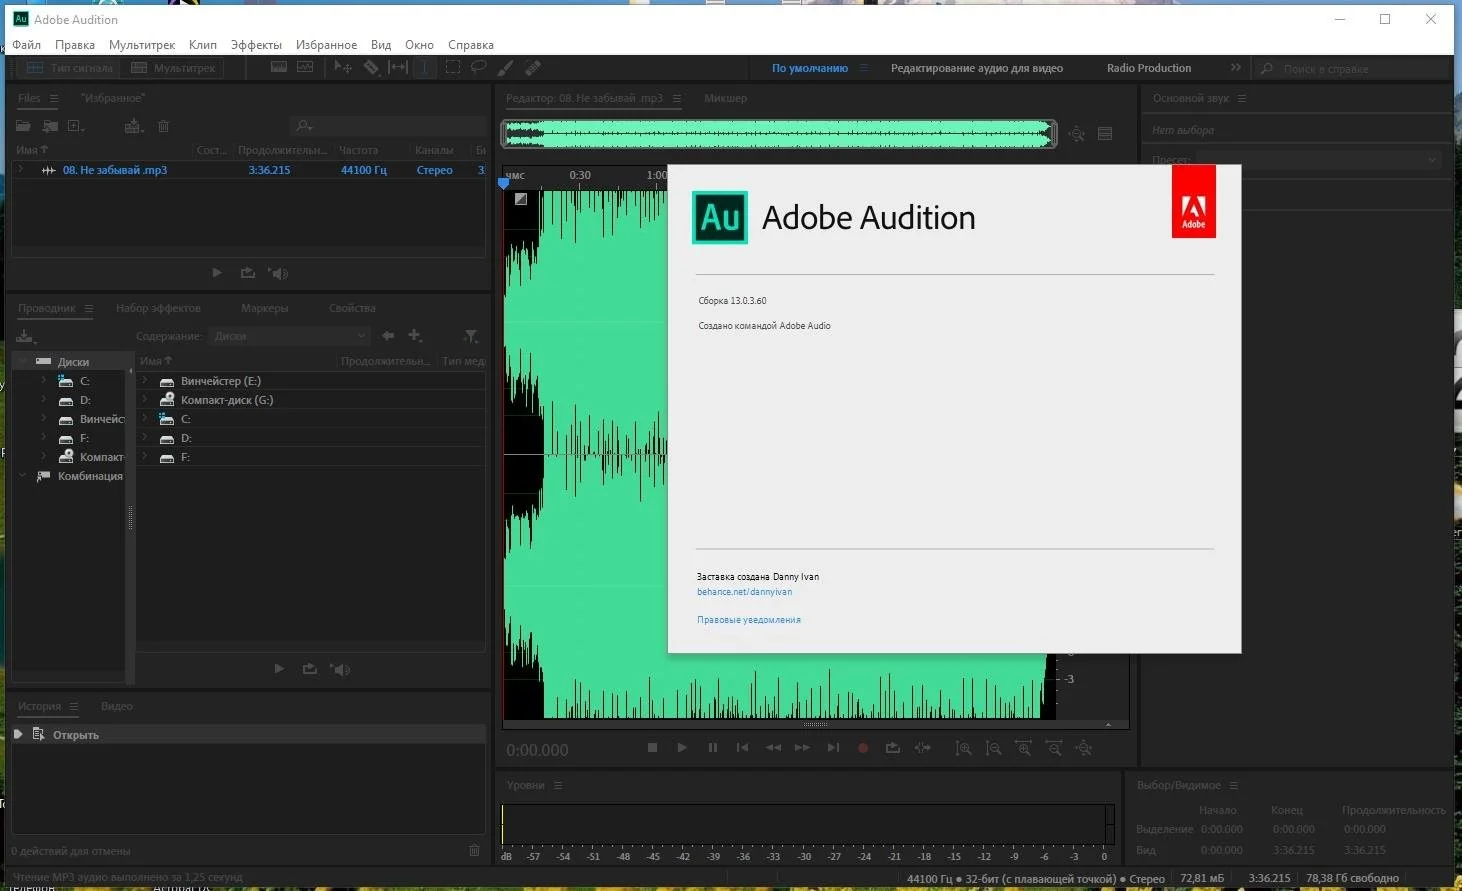 Adobe audition full version crack + patch + serial keys + activation code full version